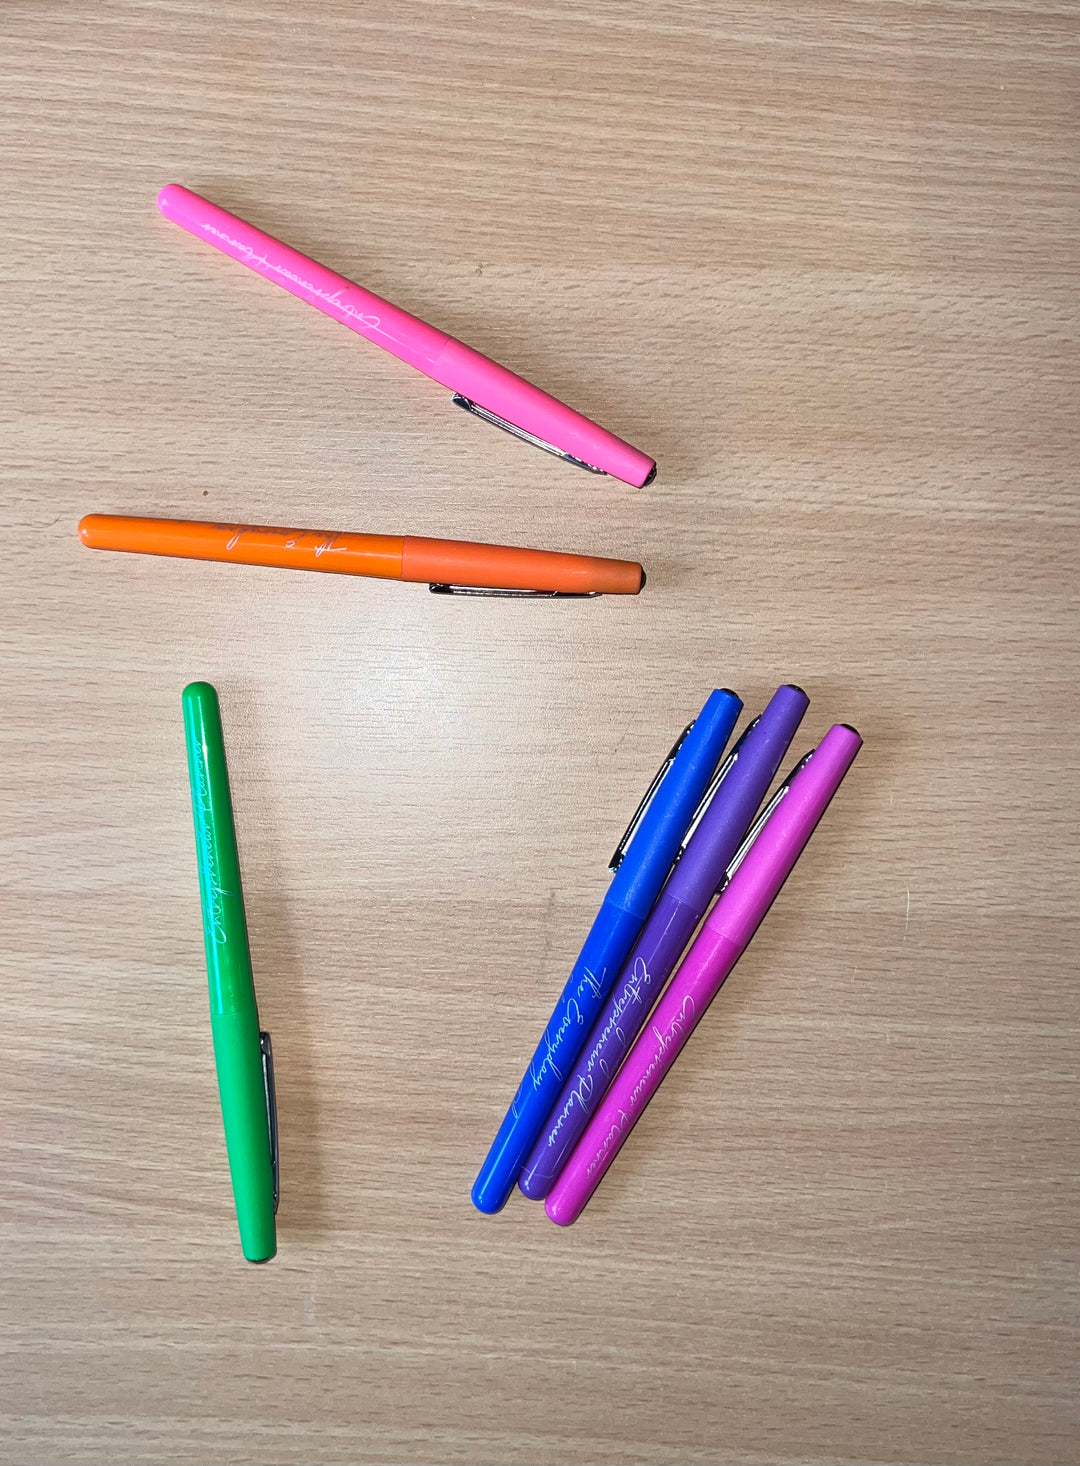 New A Set of 12 Felt Tip Marker Pens